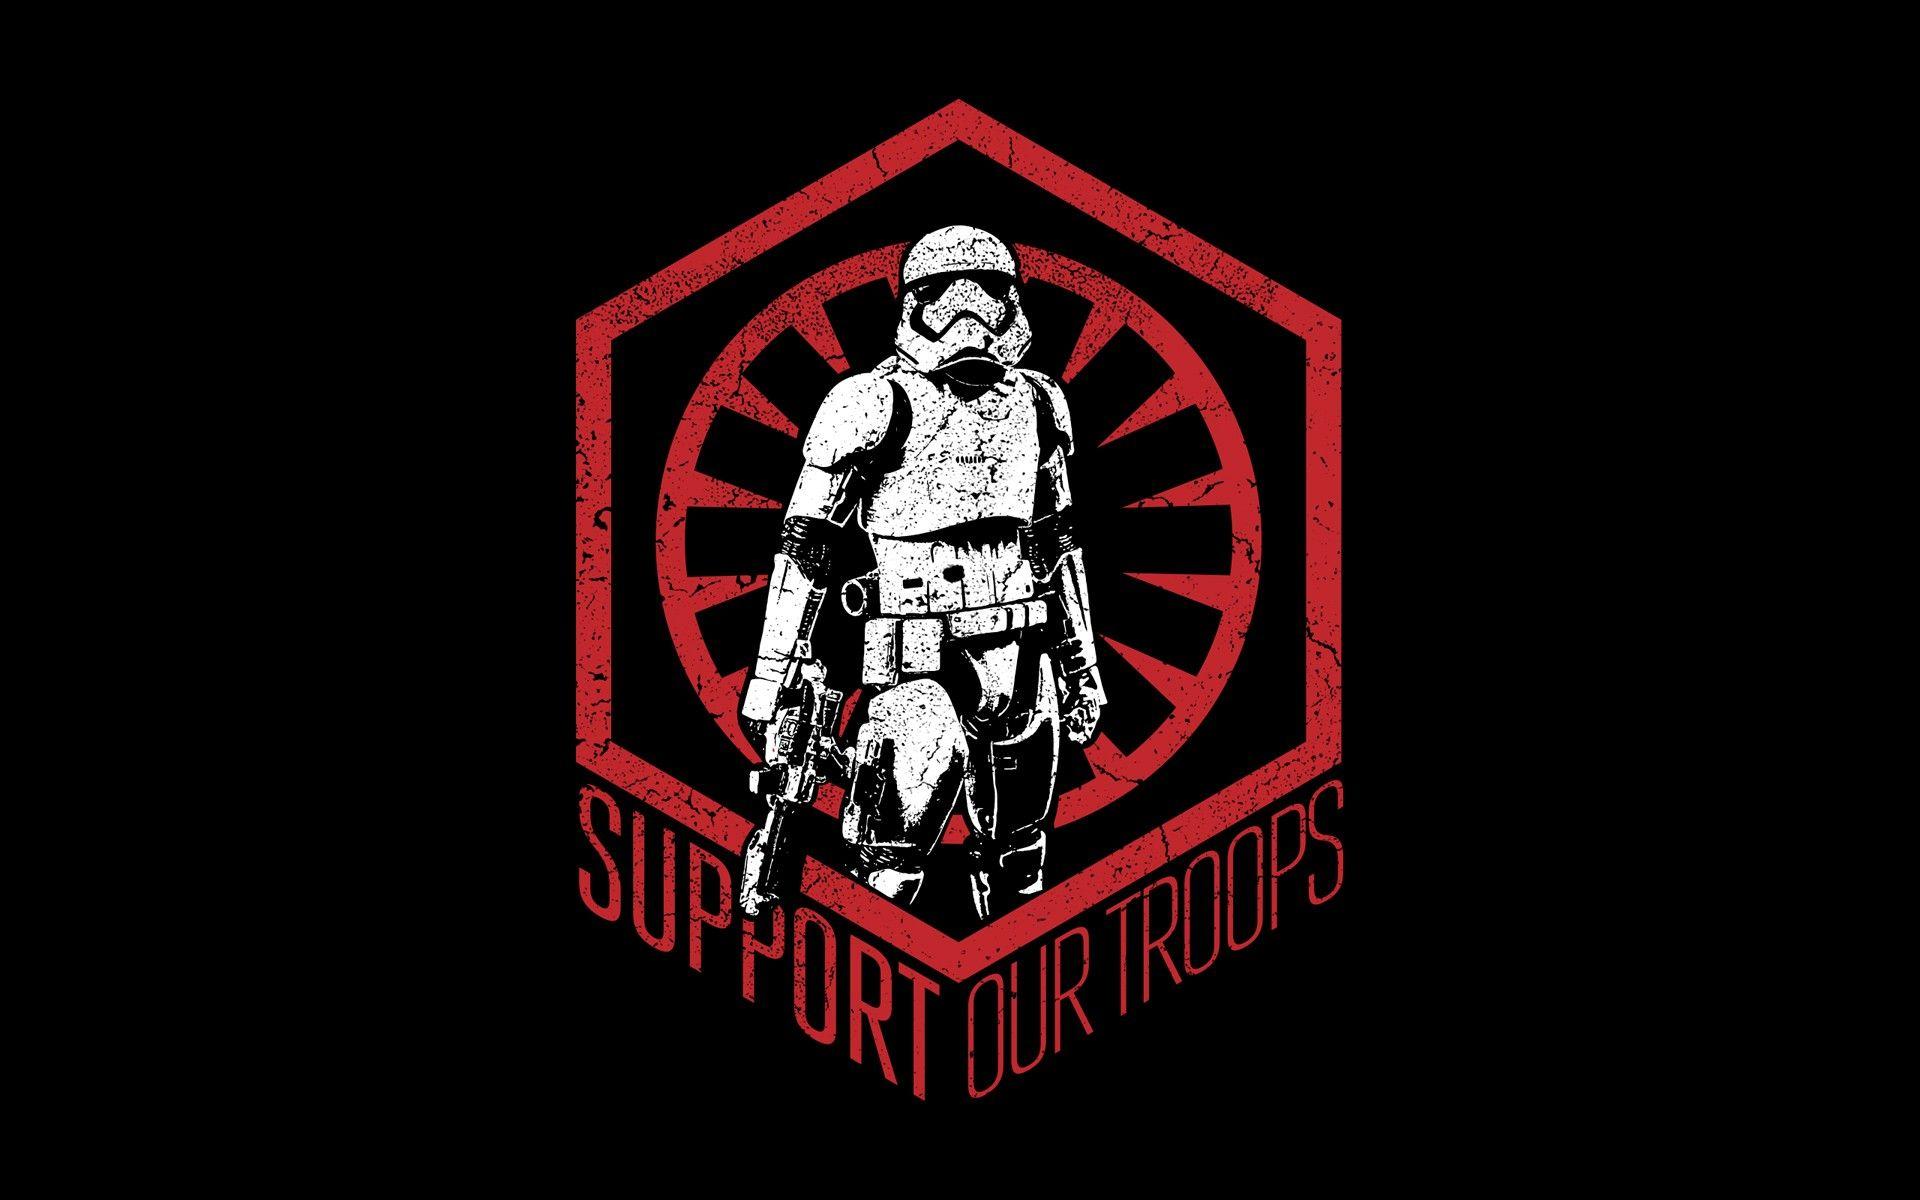 First Order Stormtrooper wallpaperDownload free stunning full